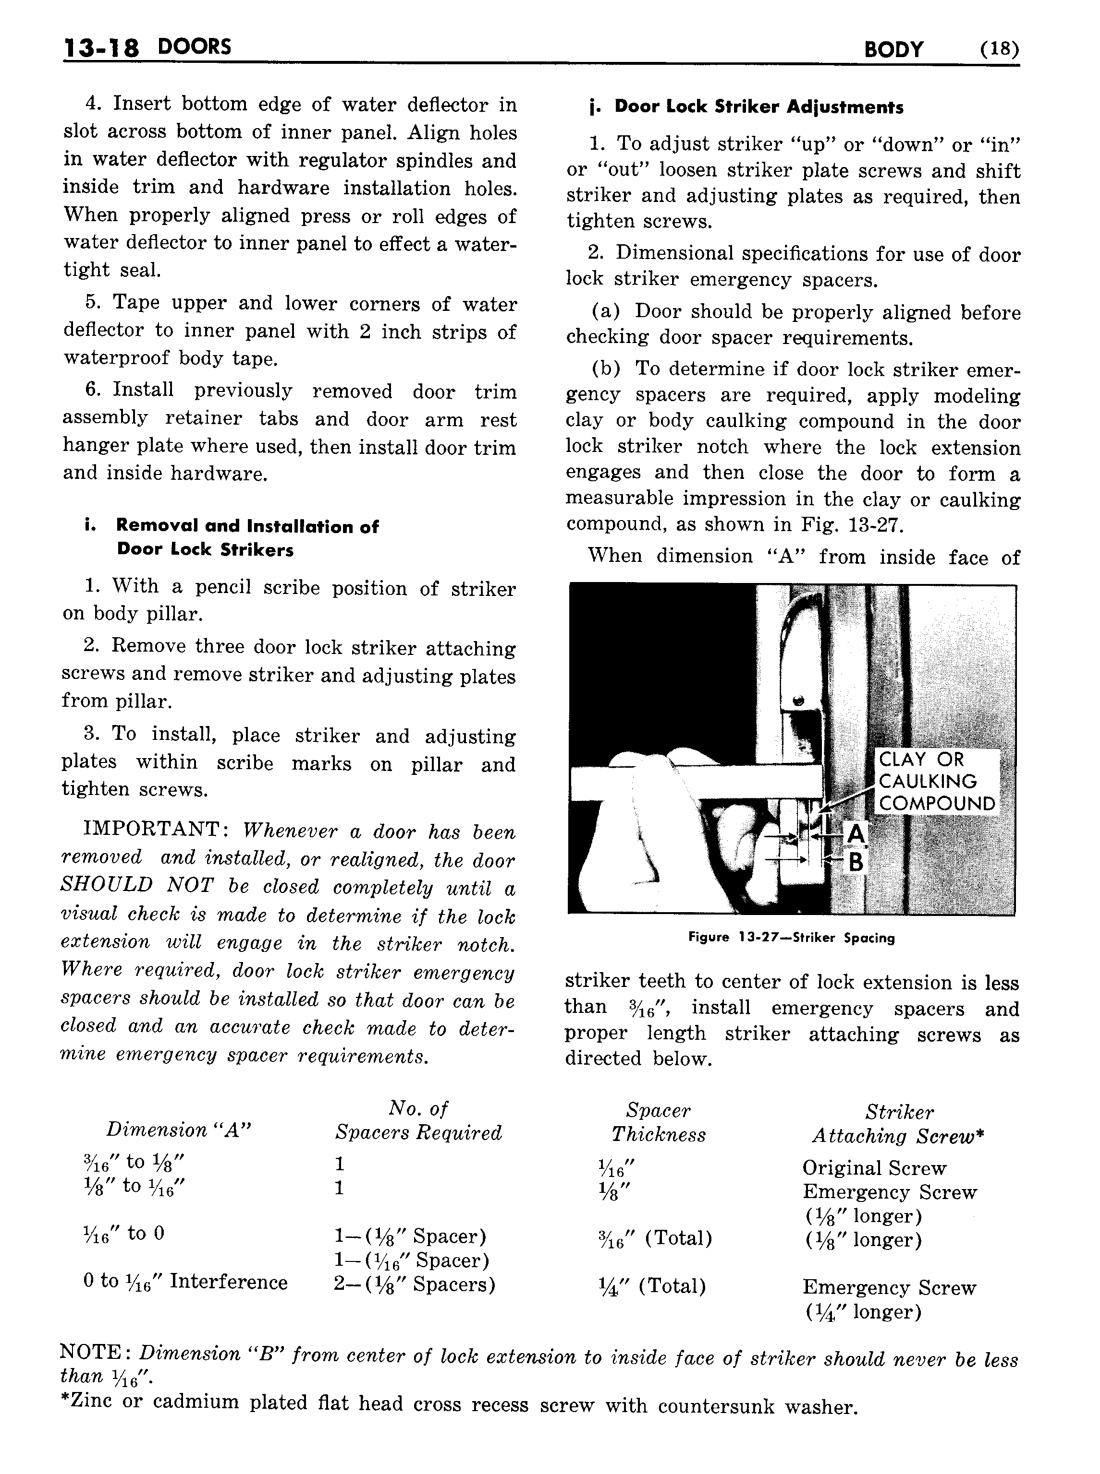 n_1957 Buick Body Service Manual-020-020.jpg